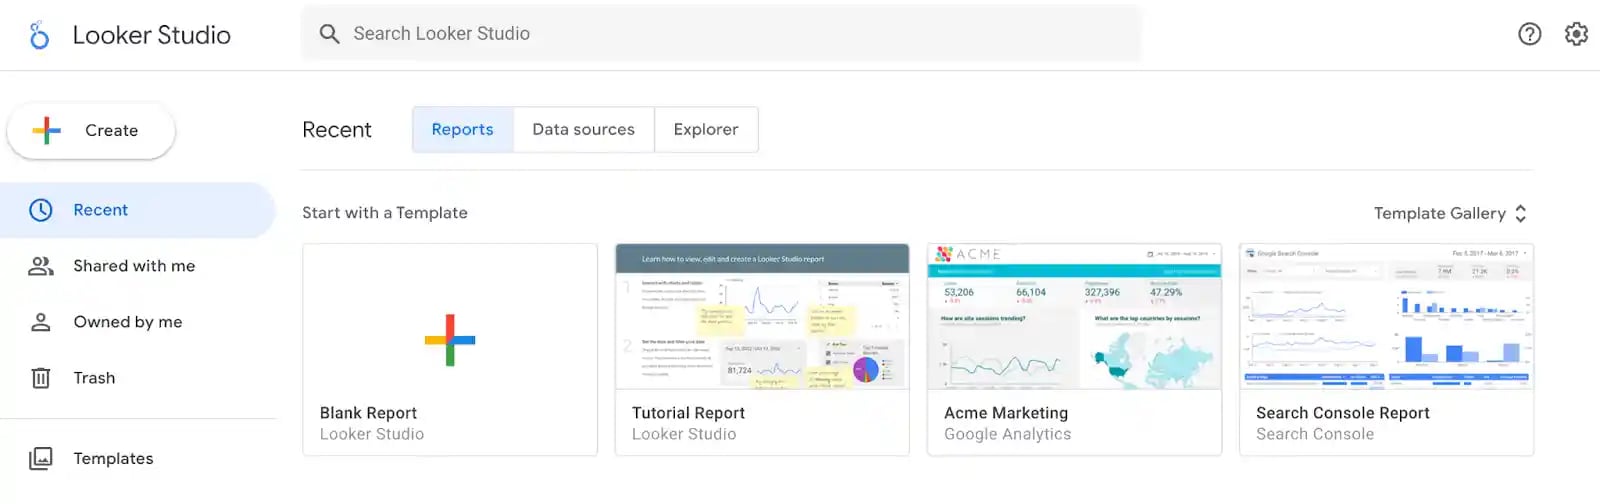 How to Use Google Looker Studio: Explore the Looker Studio Dashboard